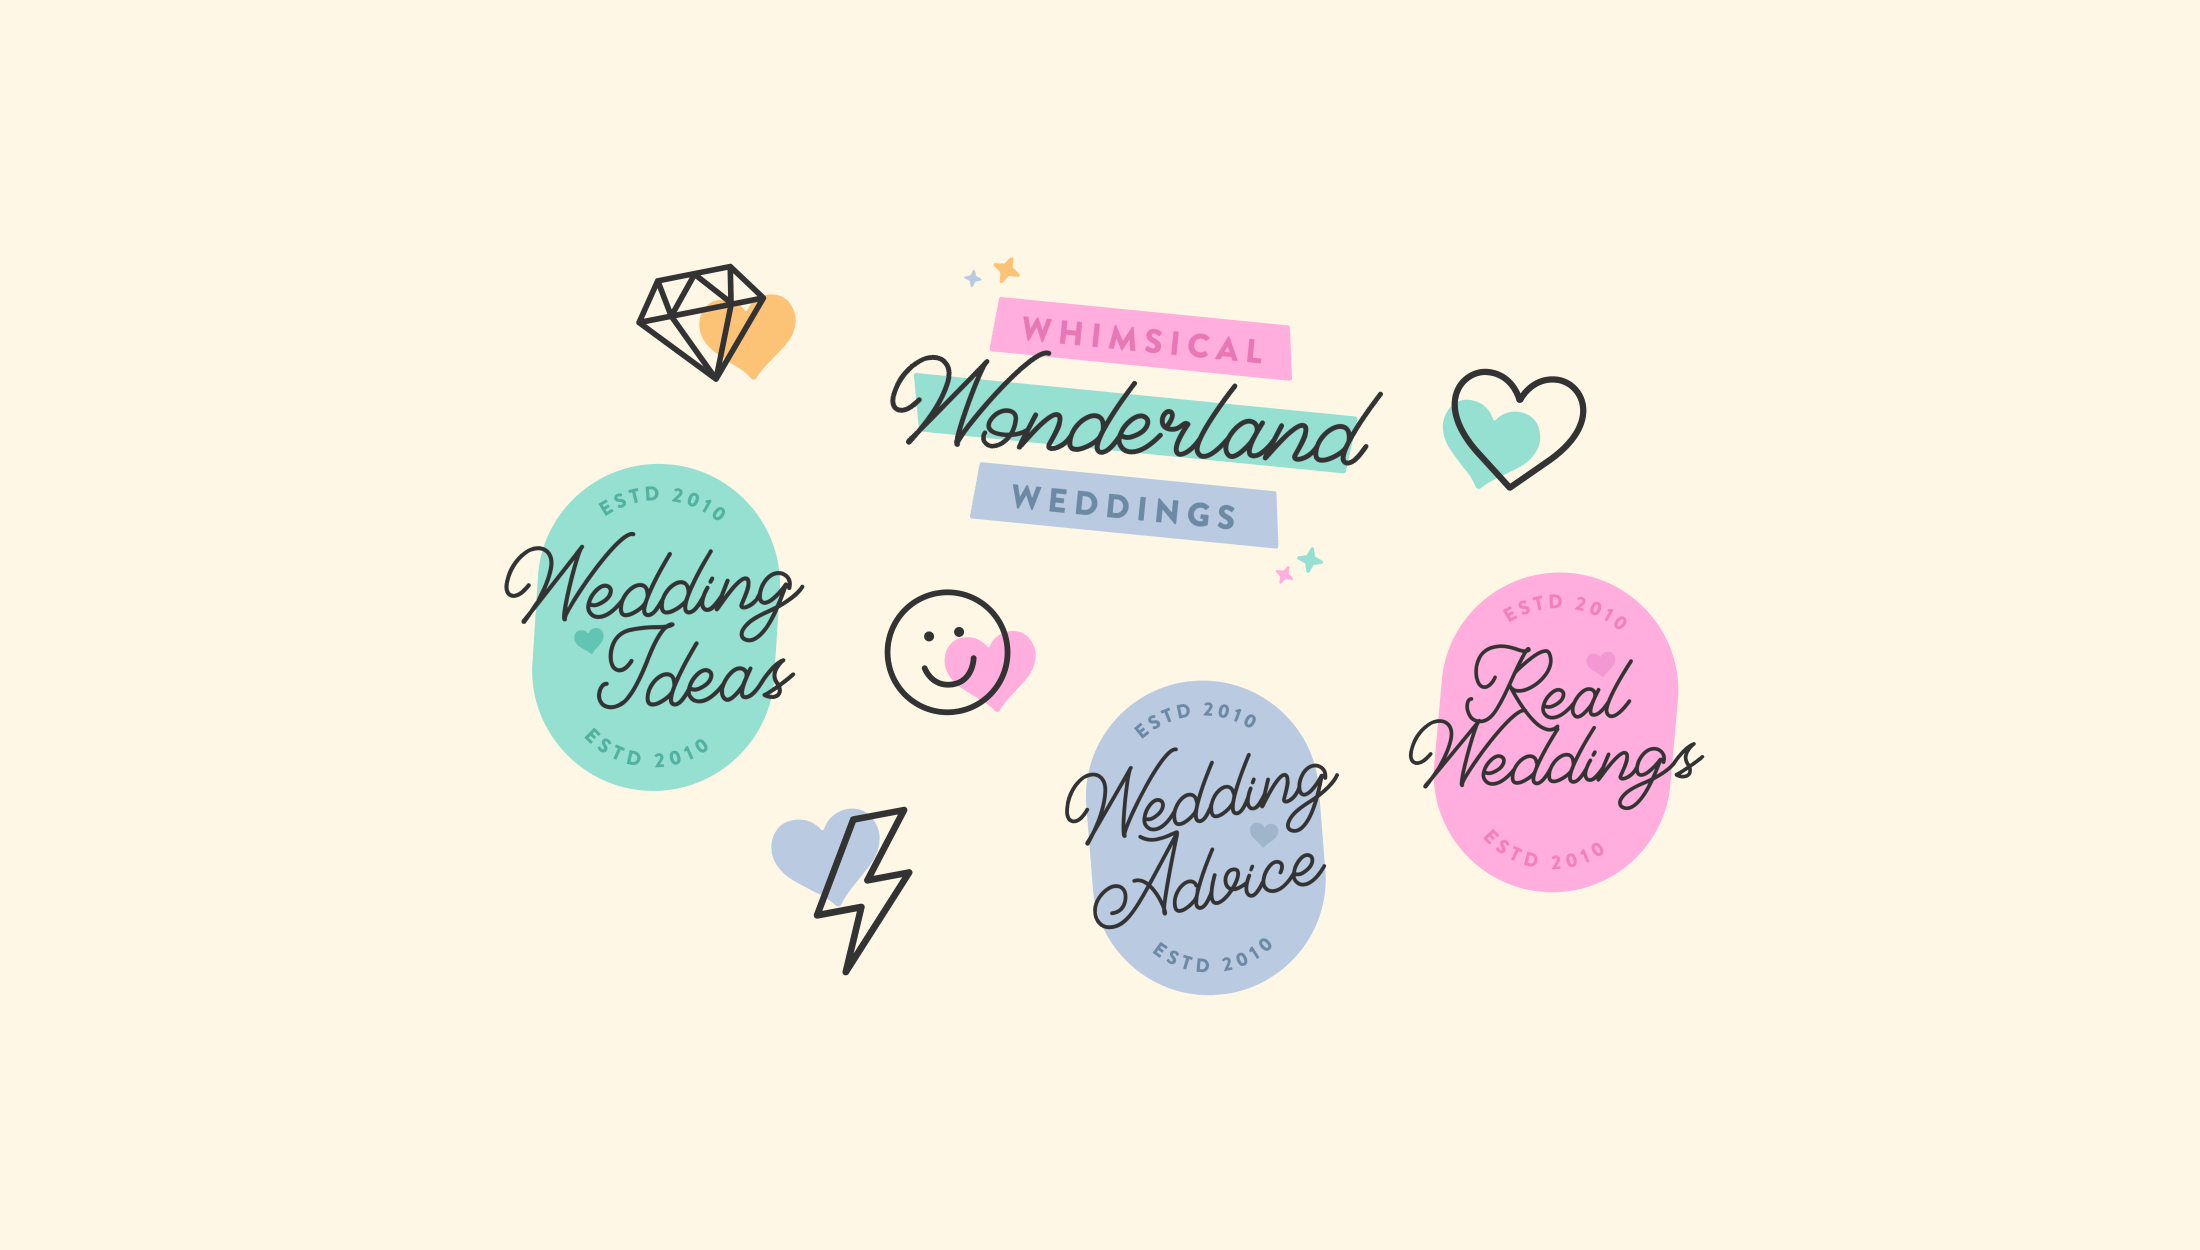 Animated sticker GIF design for Whimsical Wonderland Weddings, UK wedding inspiration blog and supplier - designed by Wiltshire-based graphic designer, Kaye Huett